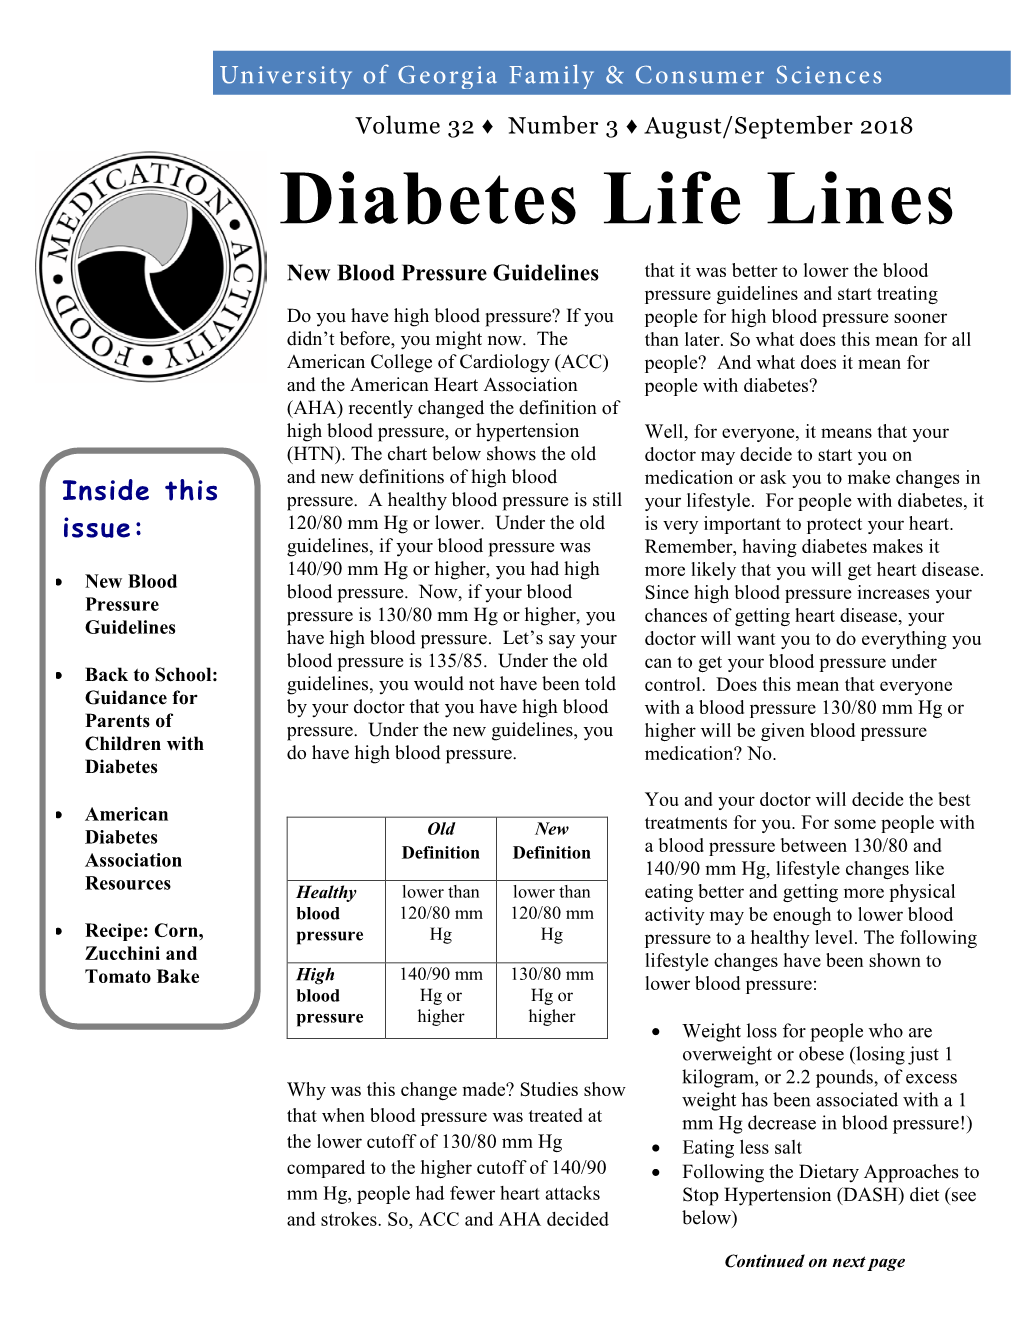 Diabetes Life Lines Newsletter, Vol. 32, No. 3, August/September 2018